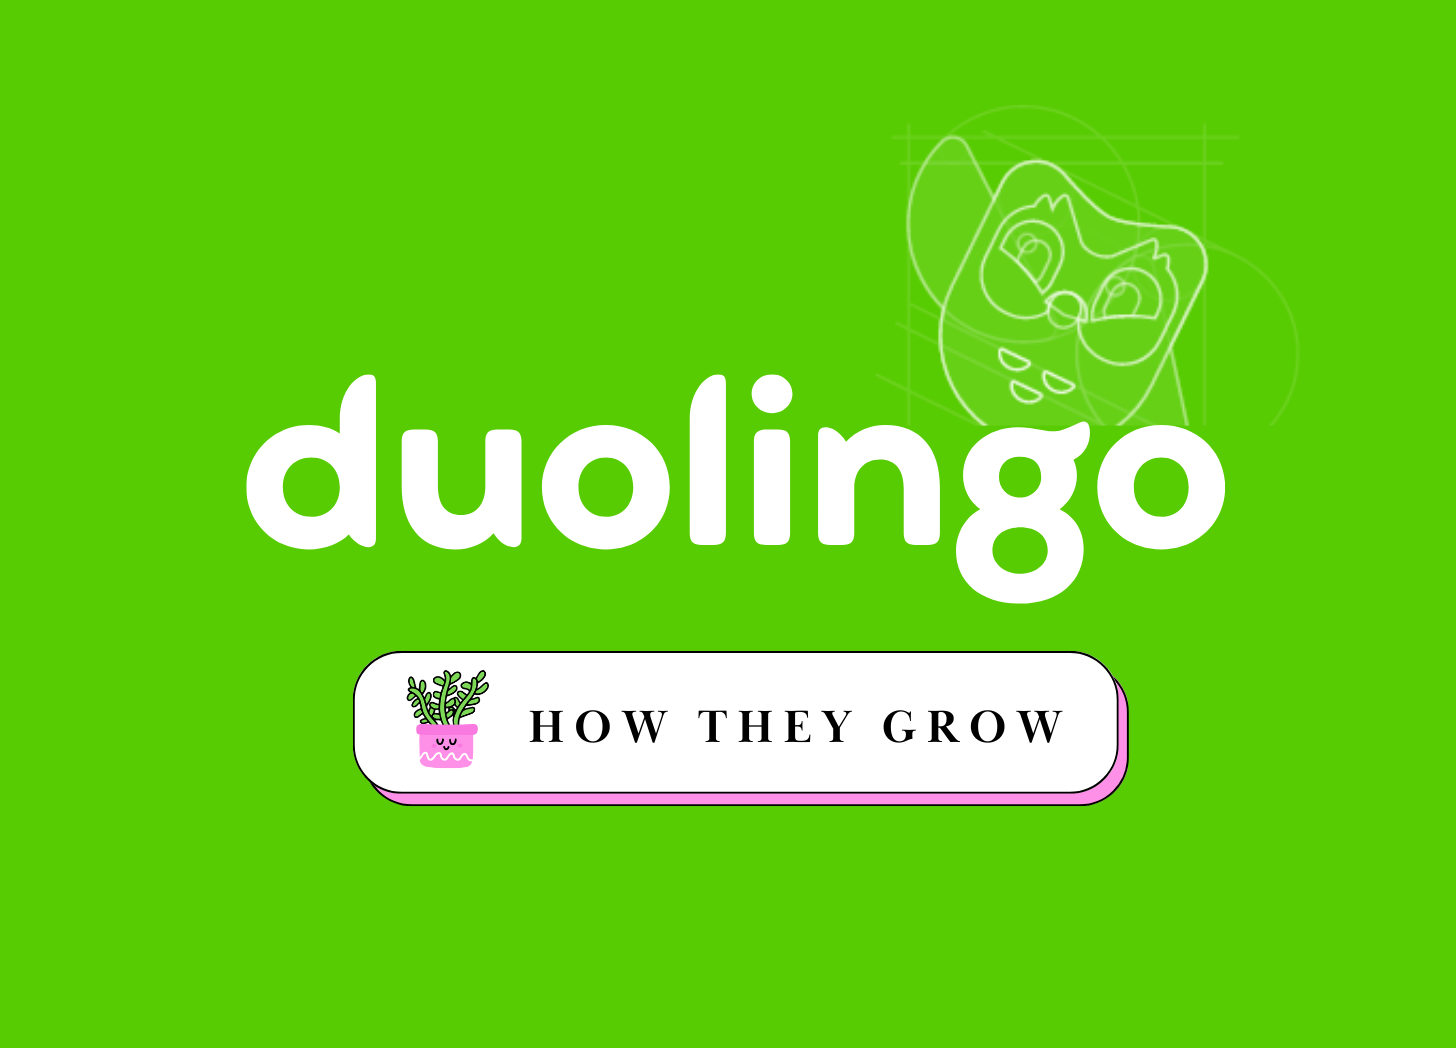 How Duolingo Grows